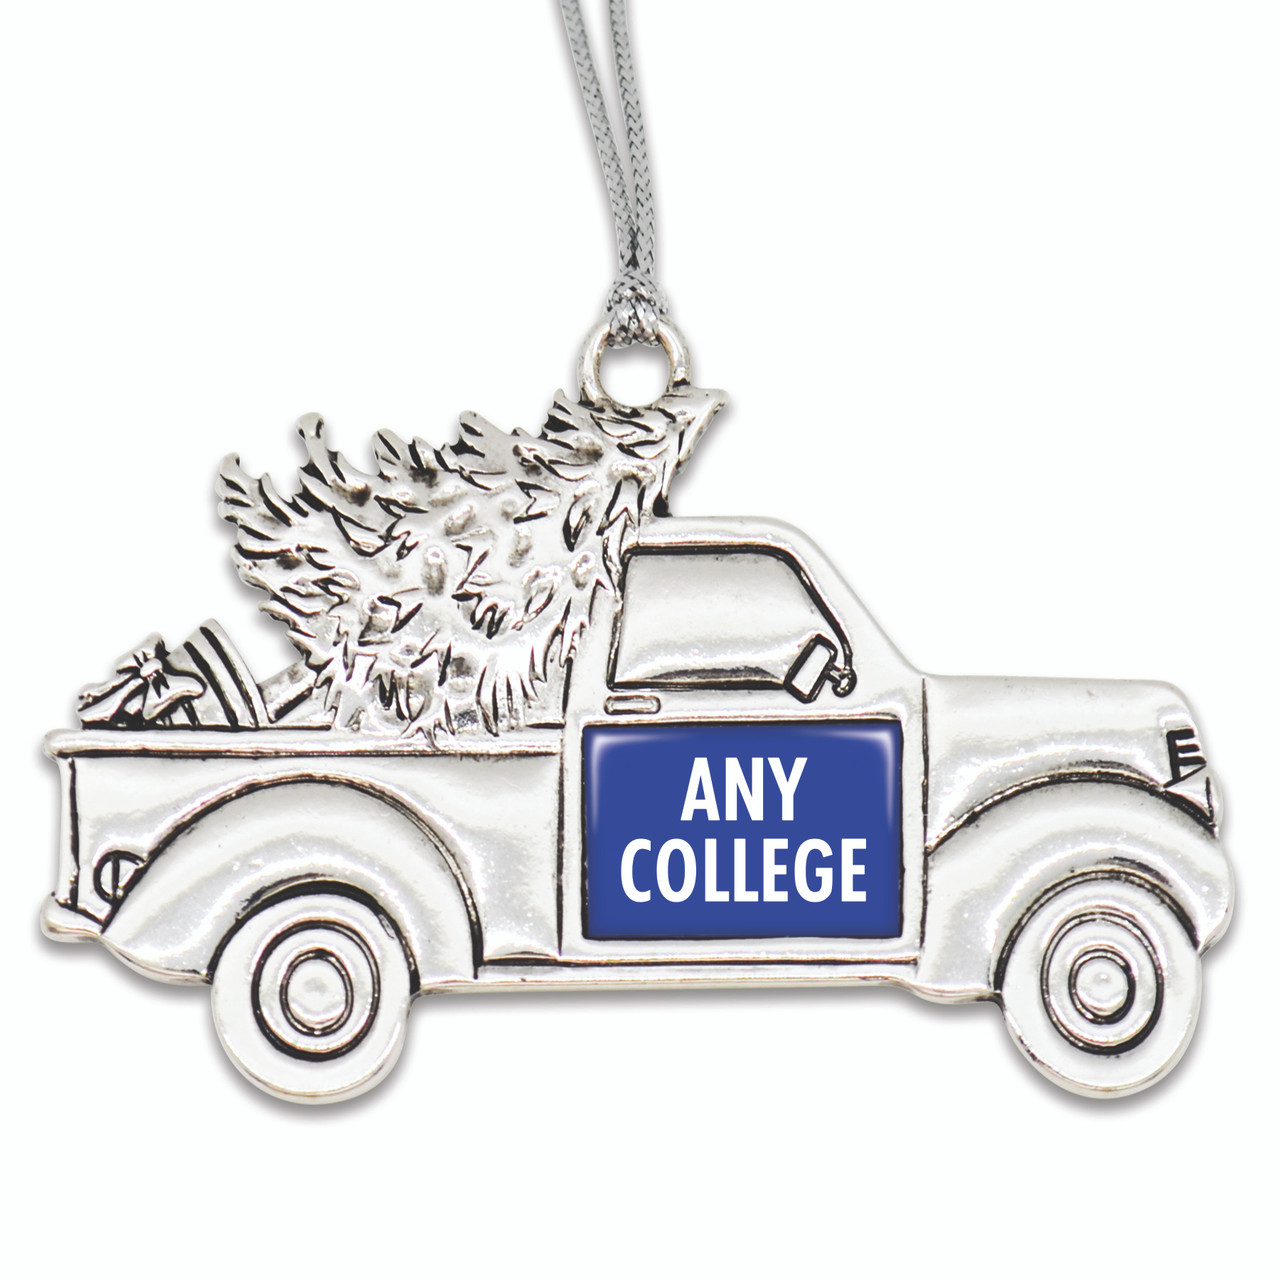 * Choose Your College * Vintage Truck Ornament